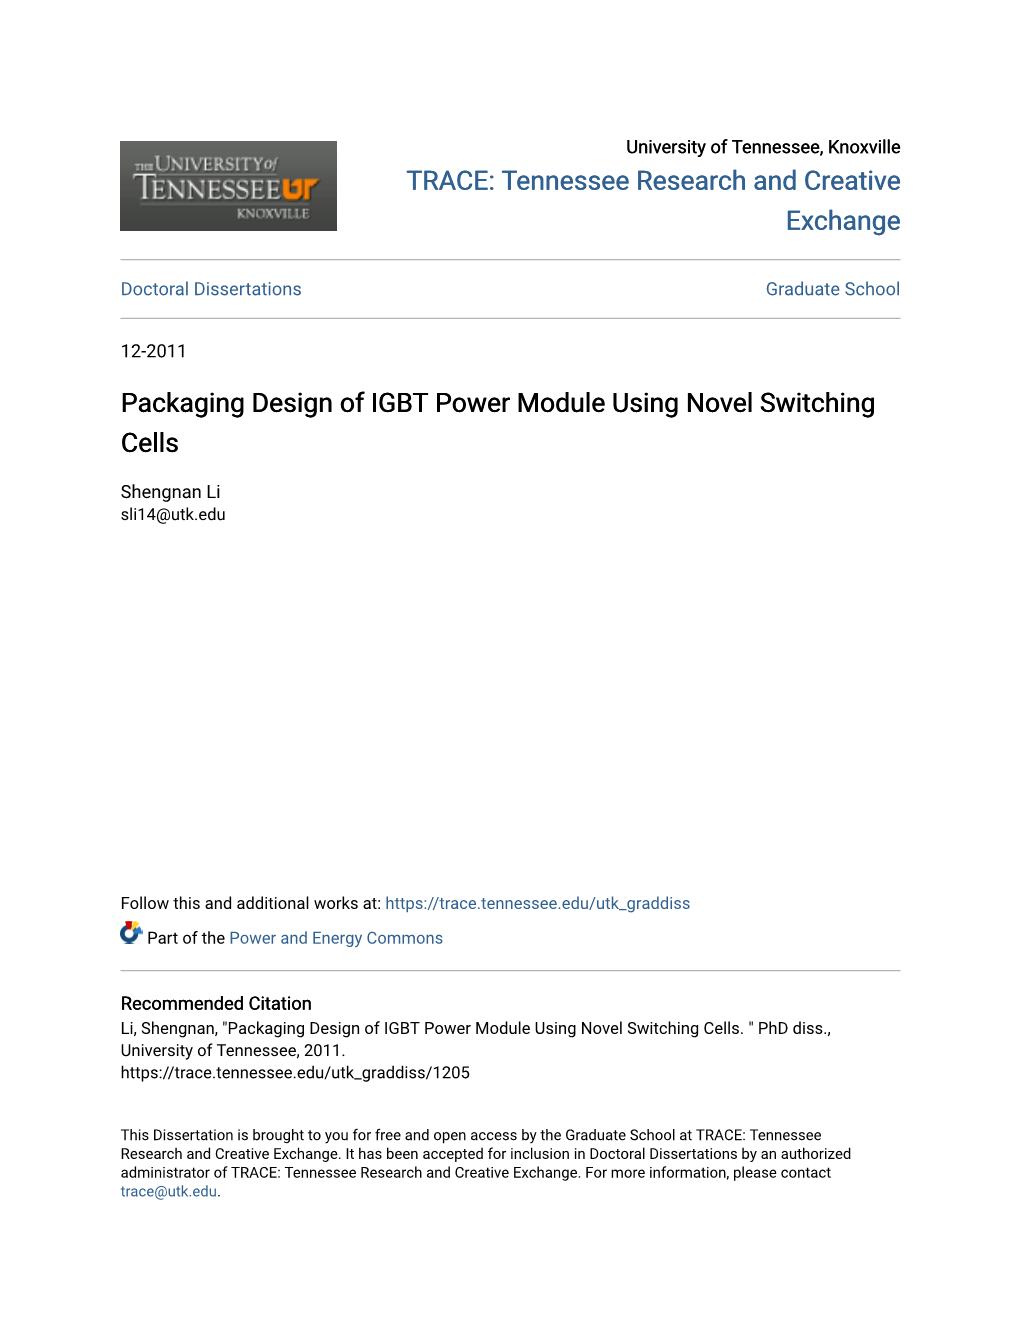 Packaging Design of IGBT Power Module Using Novel Switching Cells